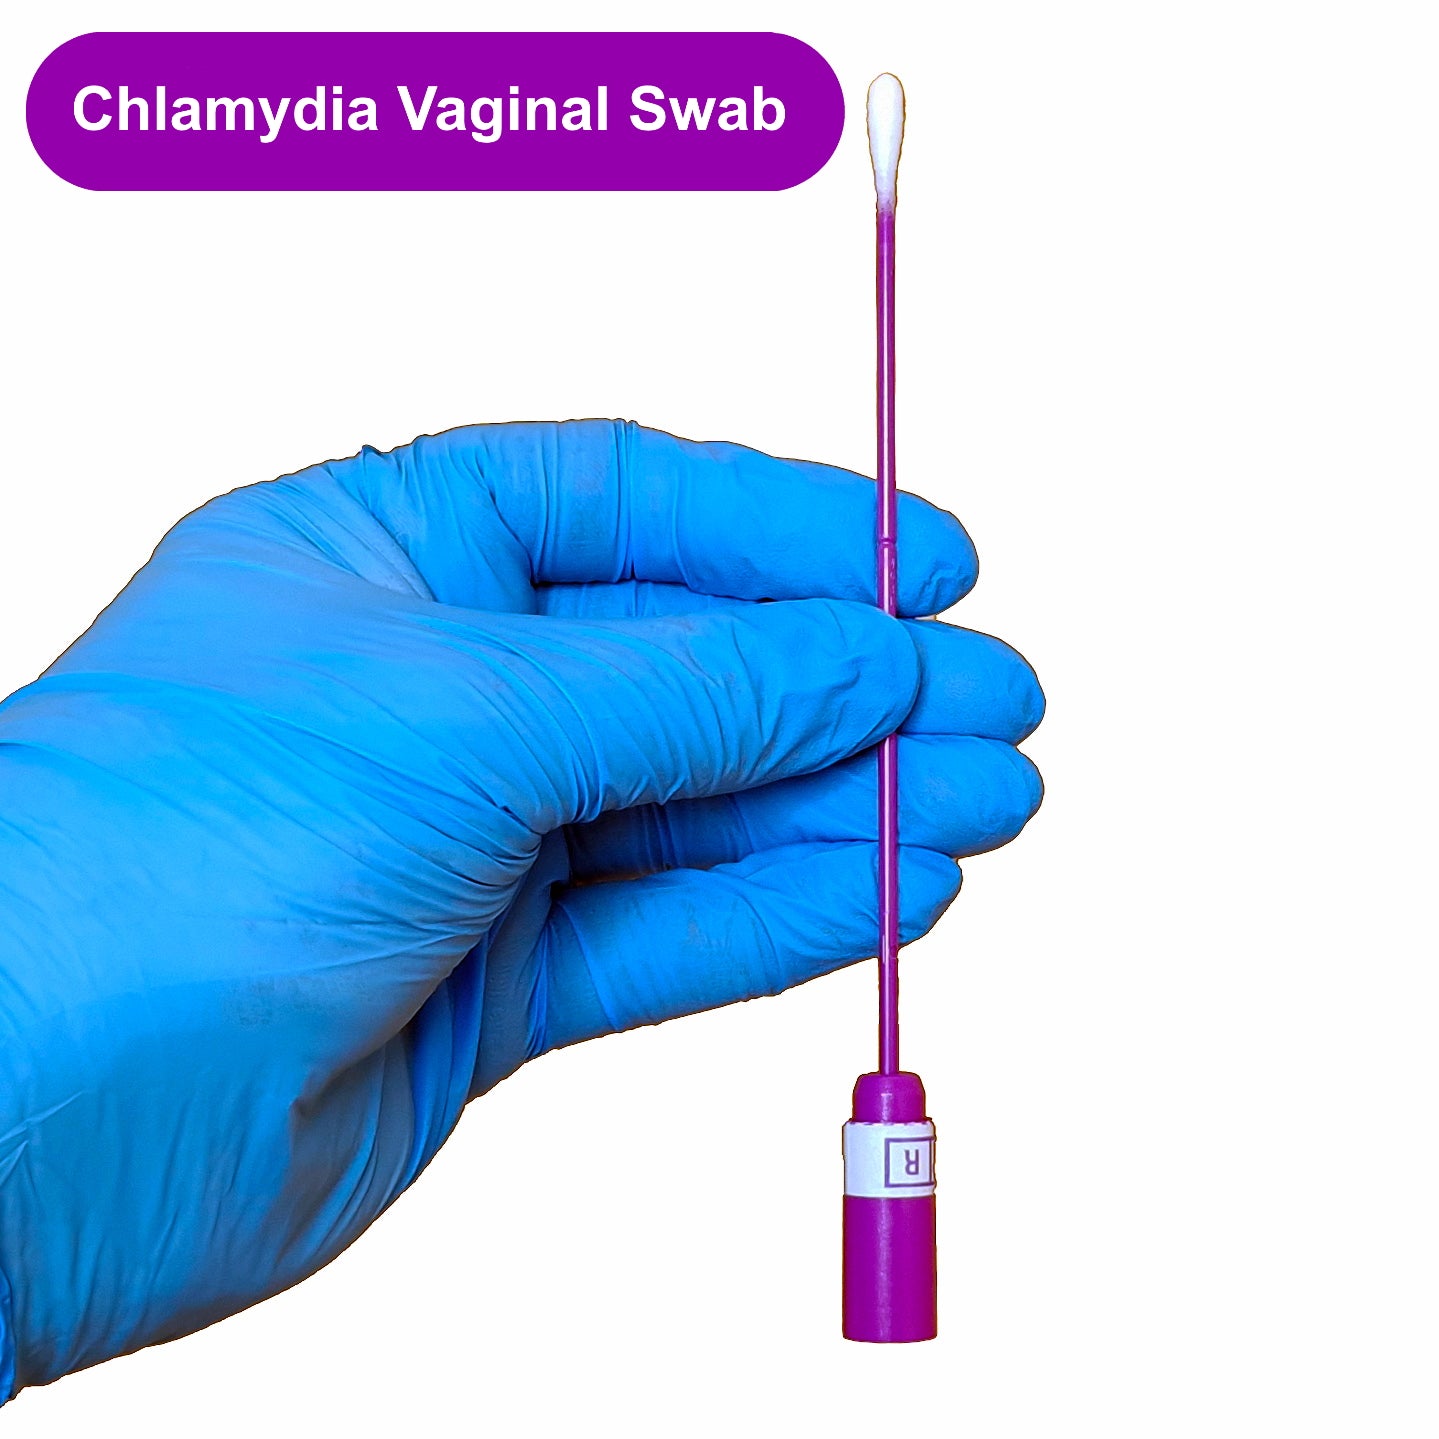 Chlamydia Vaginal Swab